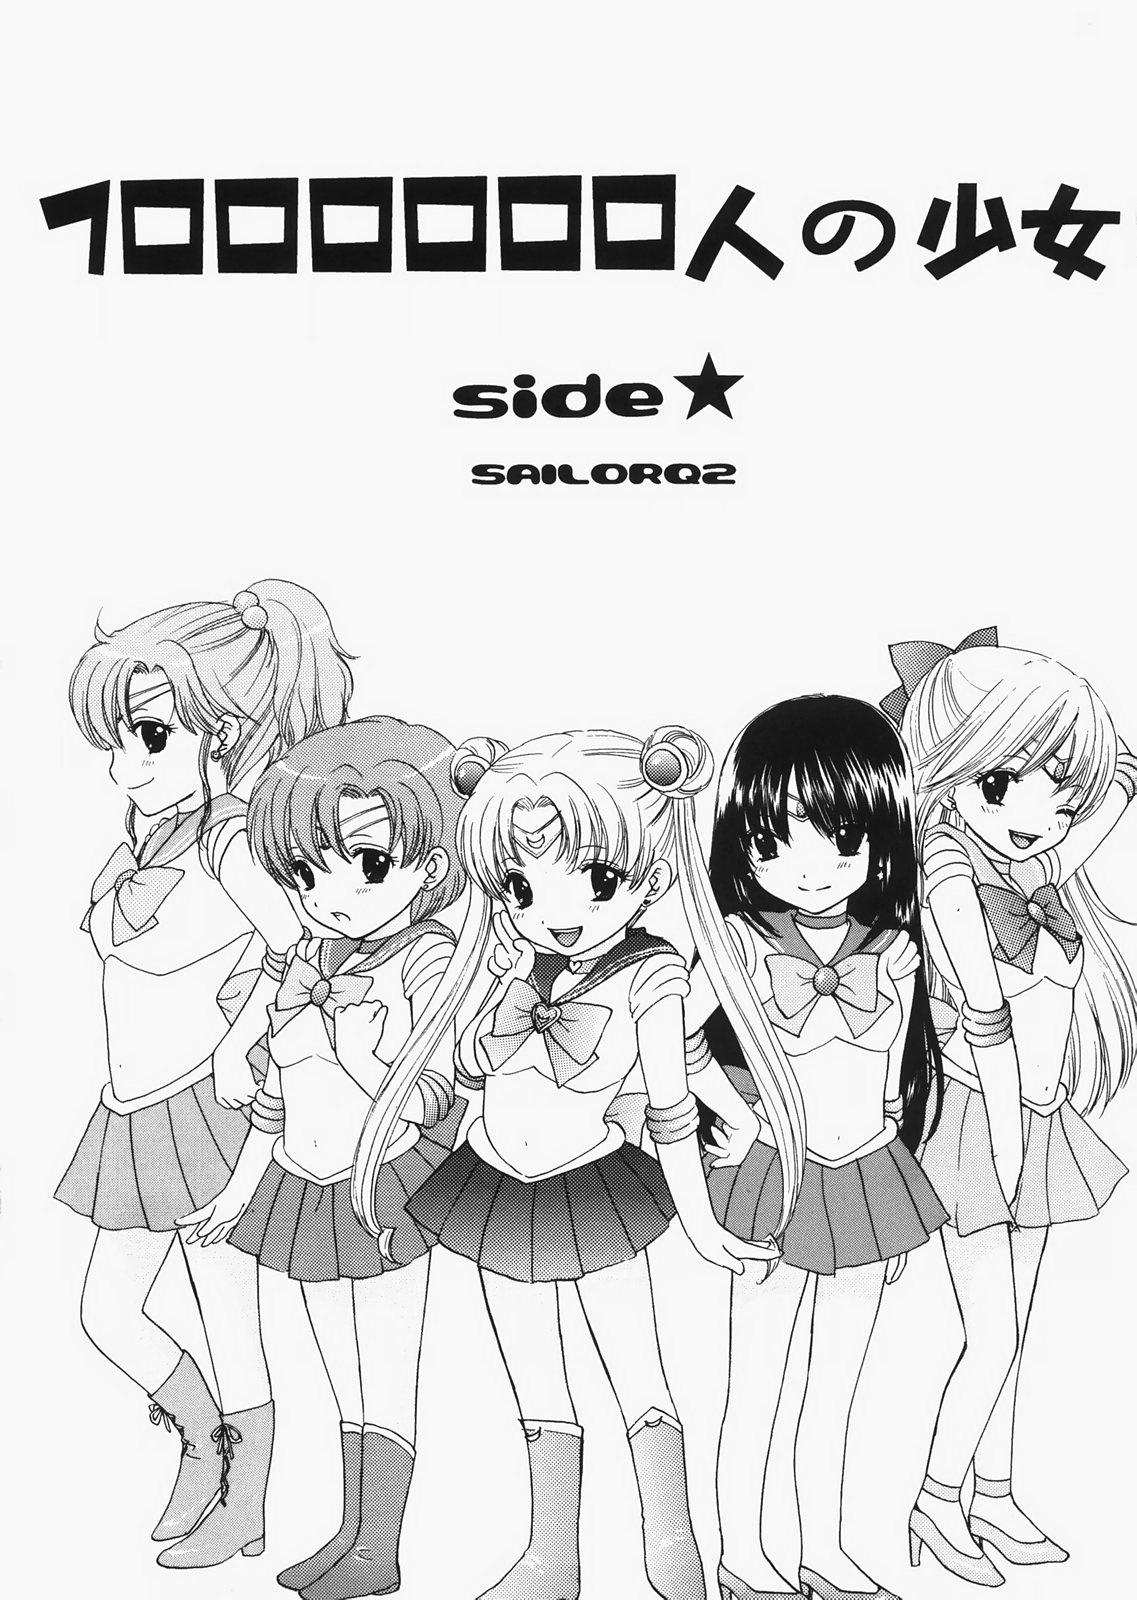 Toilet 1000000-nin no Shoujo side star - Sailor moon Hungarian - Page 4